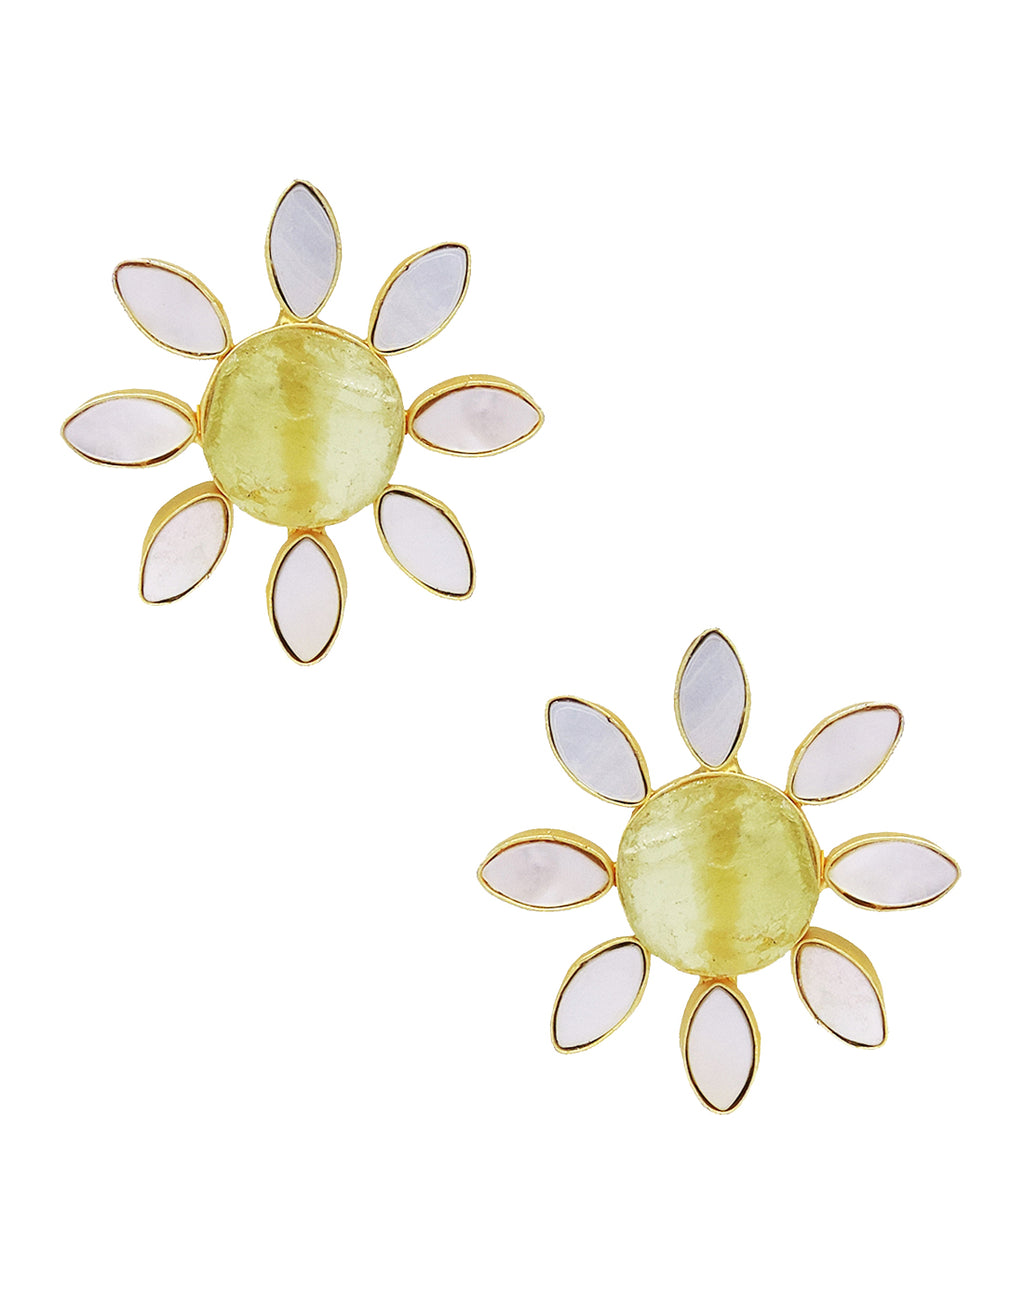 Lisa Flower Earrings (Citrine) - Statement Earrings - Gold-Plated & Hypoallergenic - Made in India - Dubai Jewellery - Dori